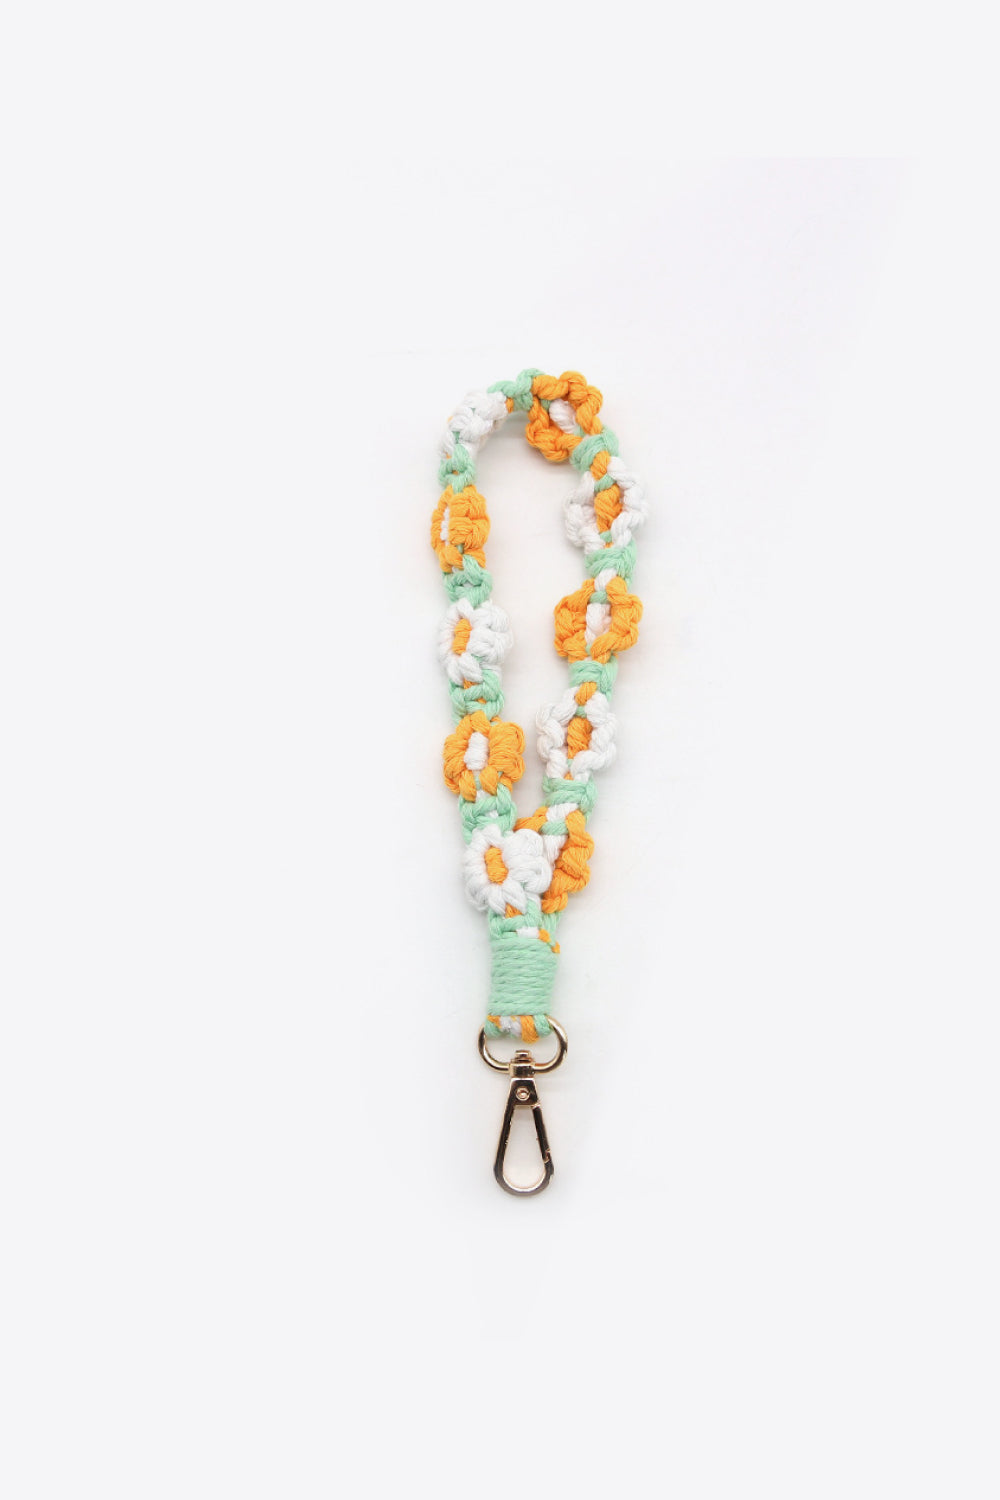 Trendsi Cupid Beauty Supplies Orange/Green / One Size Keychains Assorted 4-Piece Macrame Flower Keychain